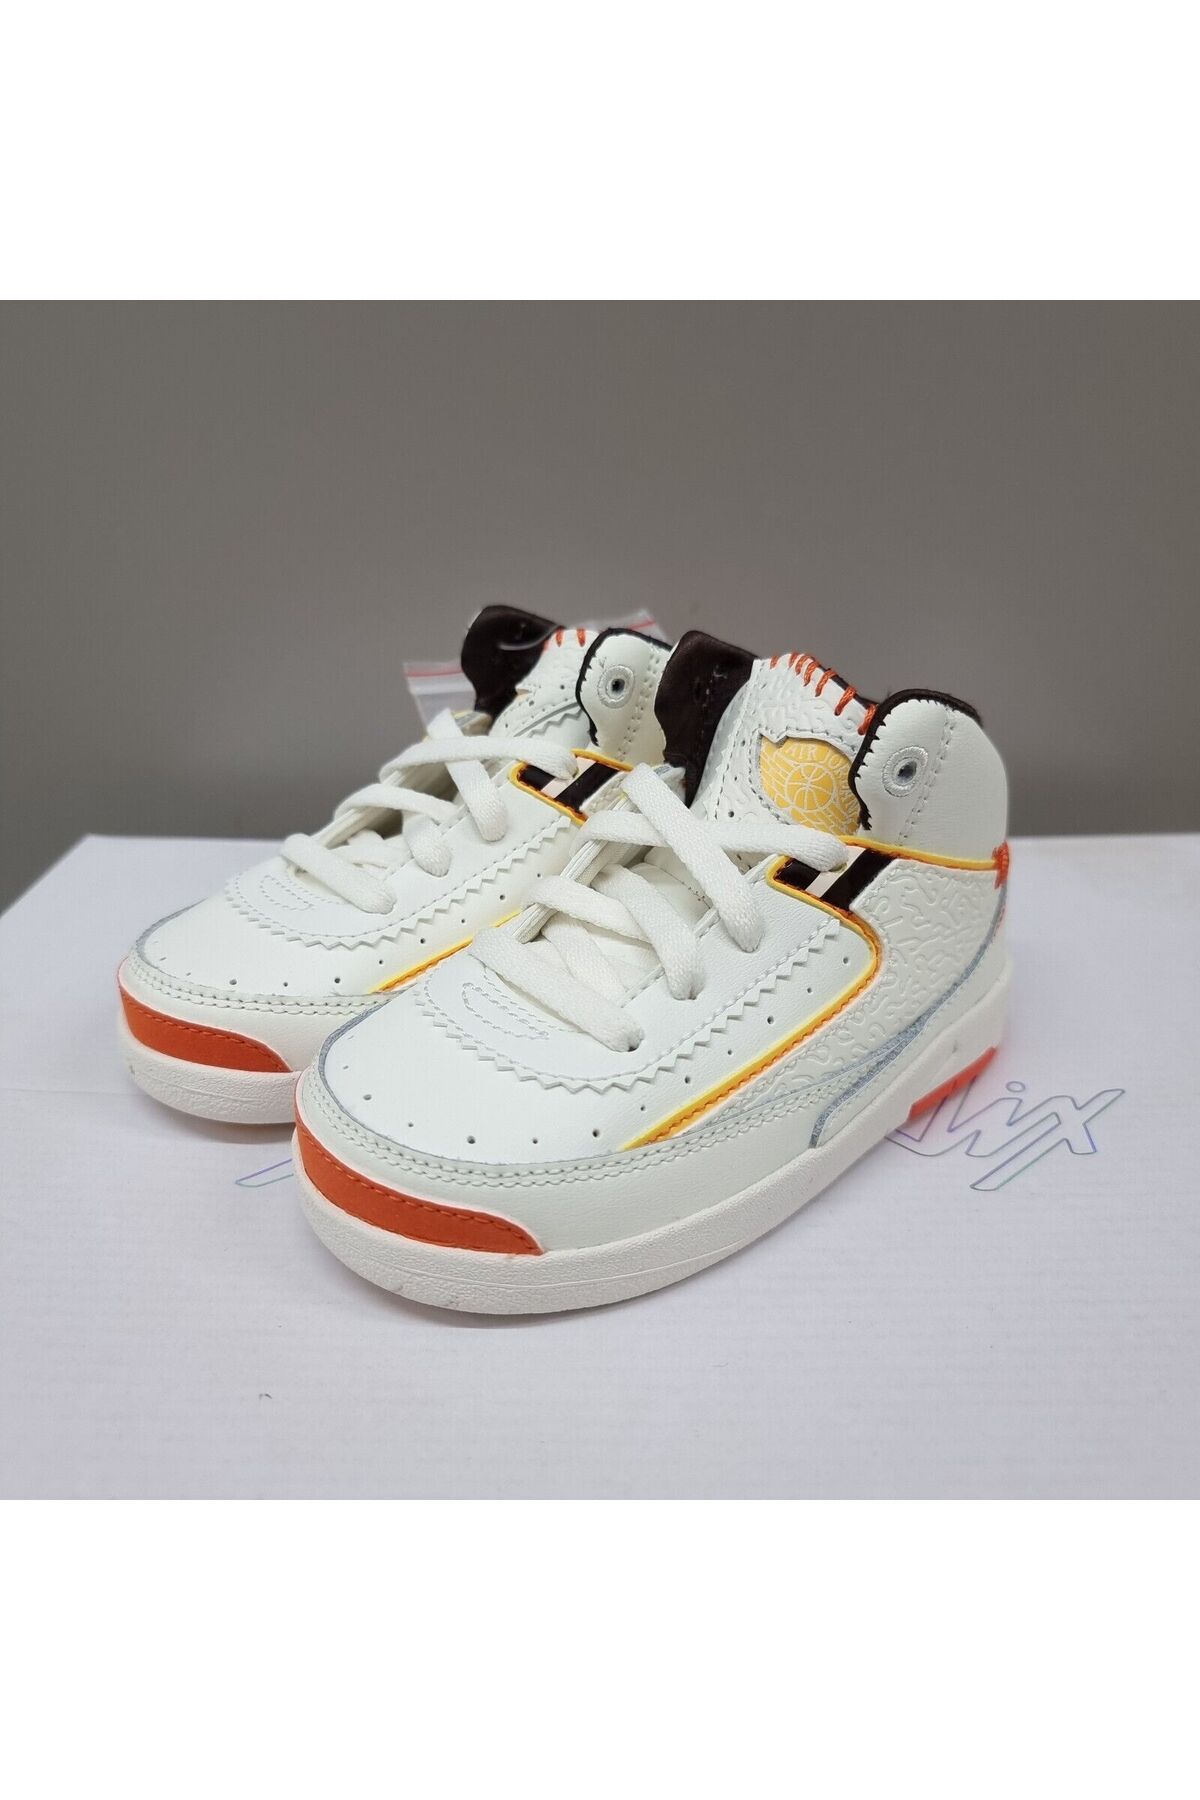 Nike Jordan 2 Retro SP TD Trainers White/Orange DO5274 180